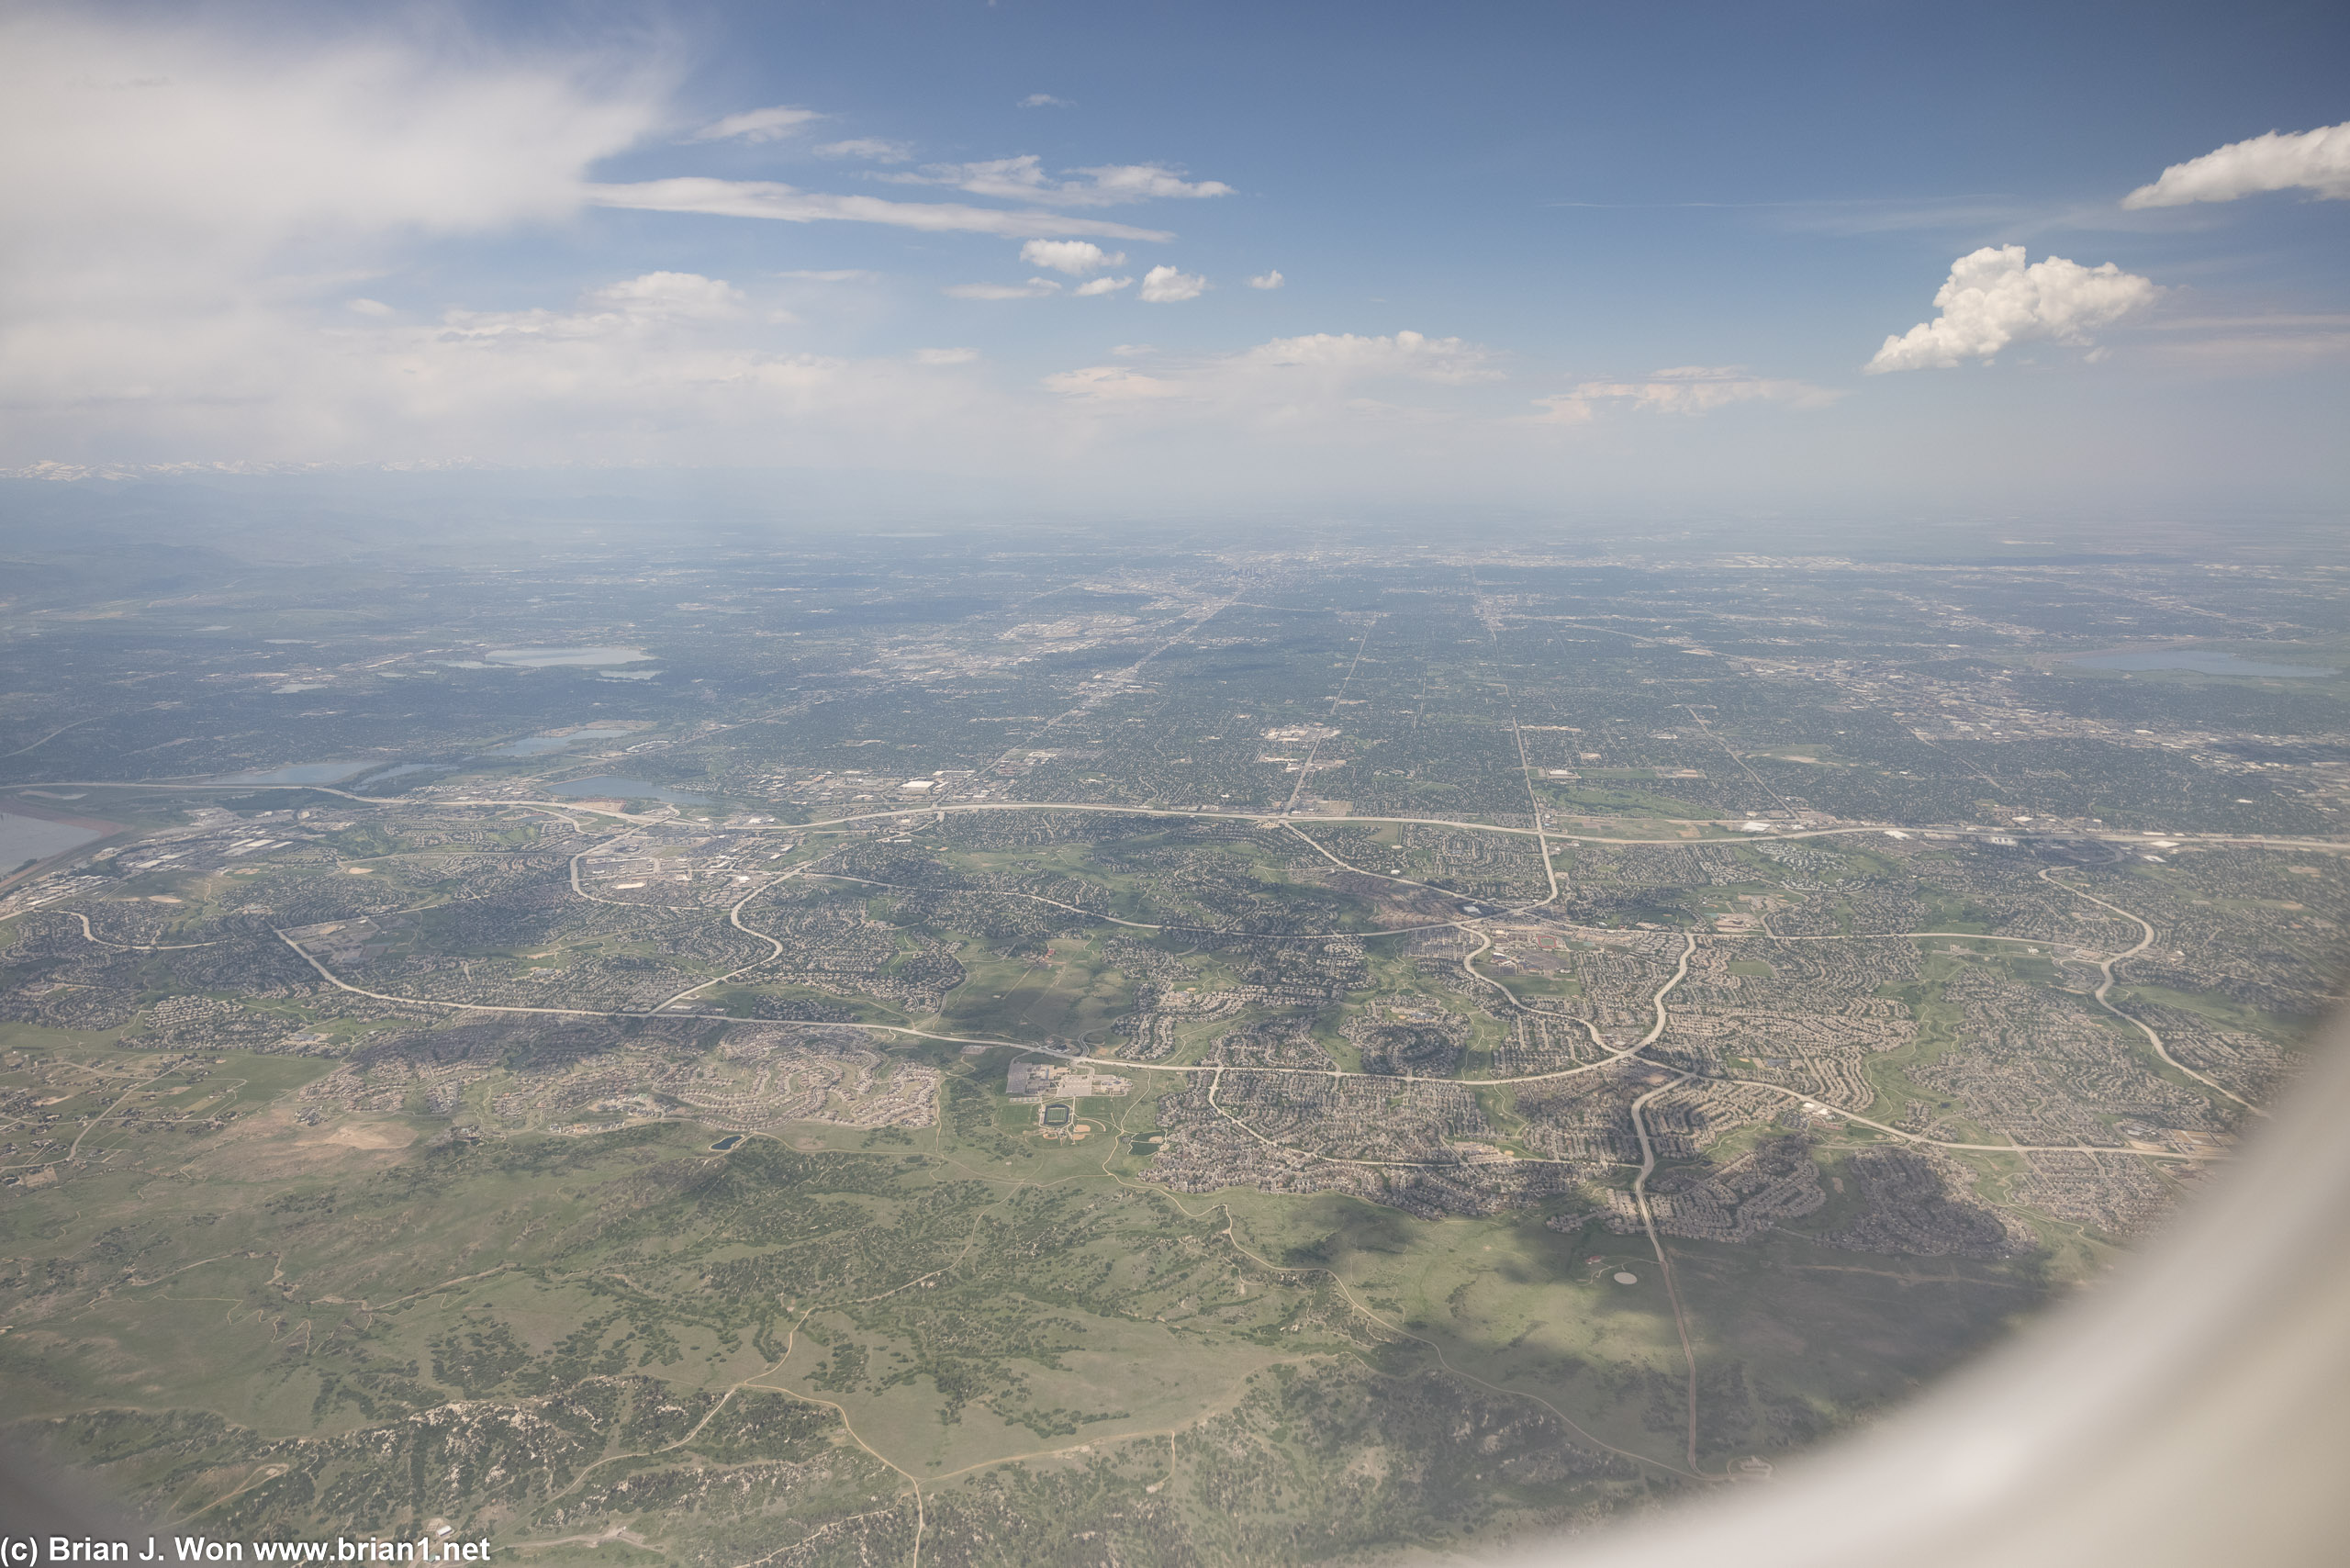 Denver... miles and miles of suburban sprawl.